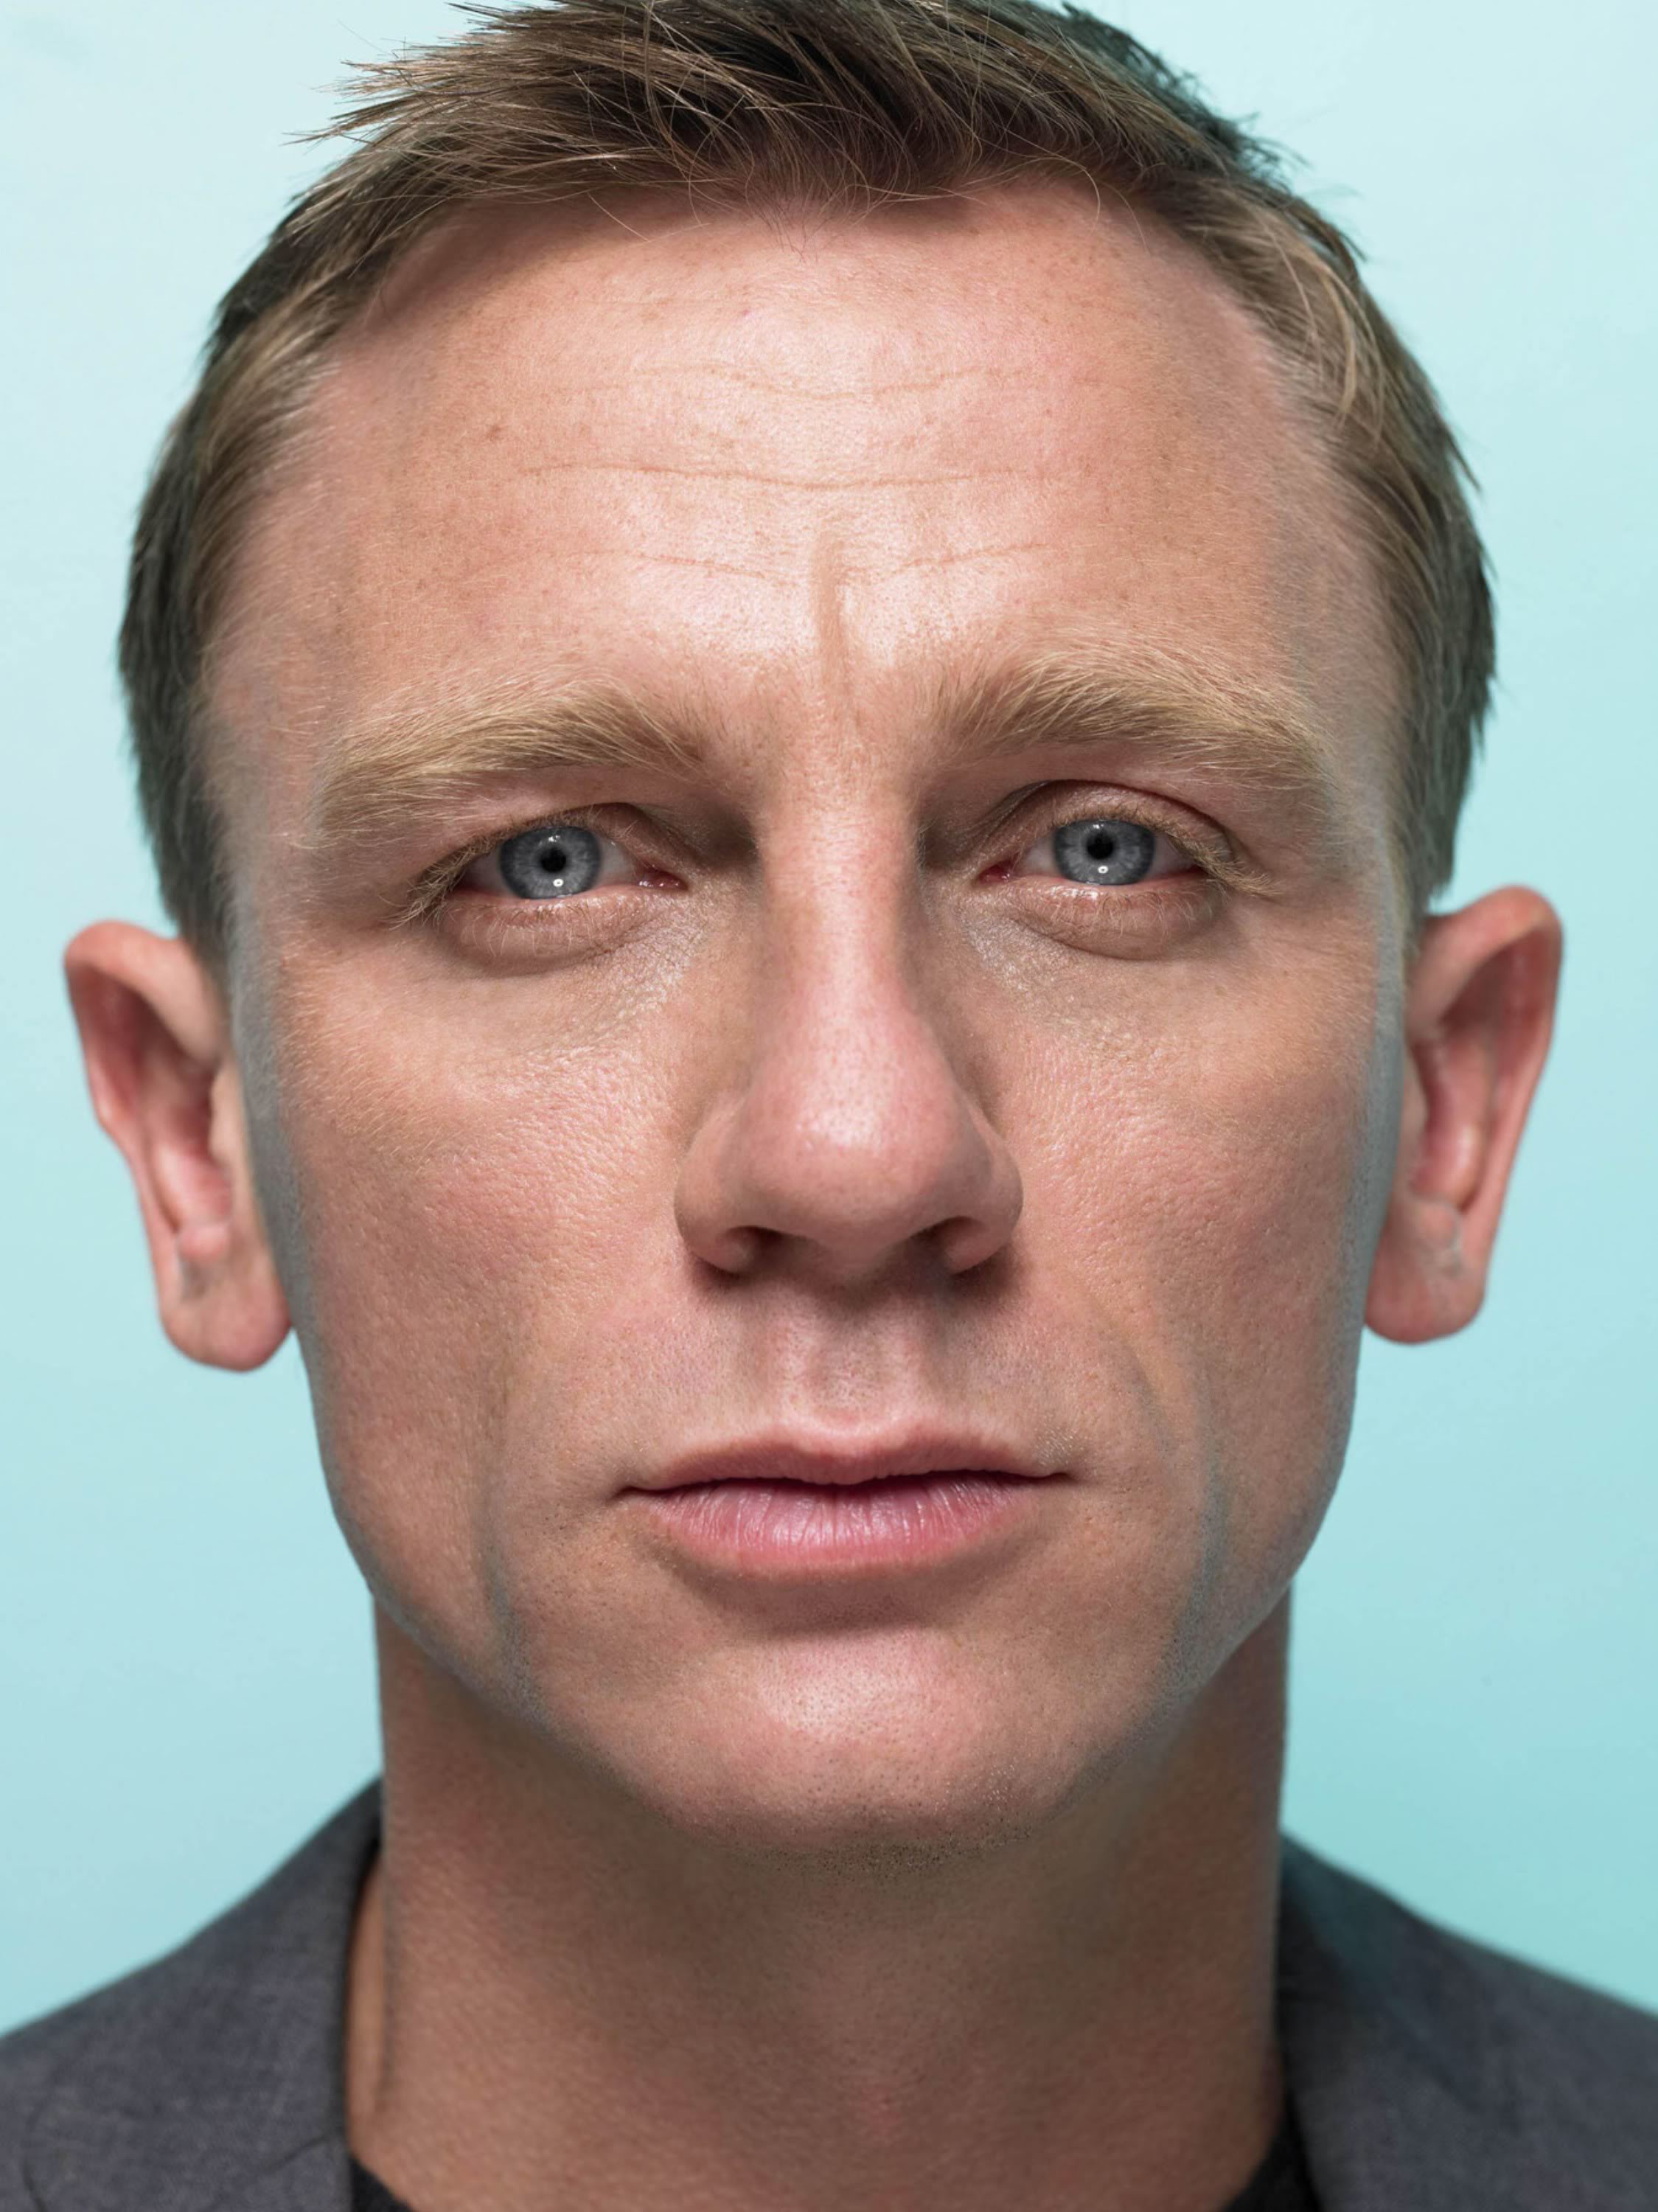 Daniel Craig photo 500 of 775 pics, wallpaper - photo #504370 - ThePlace2